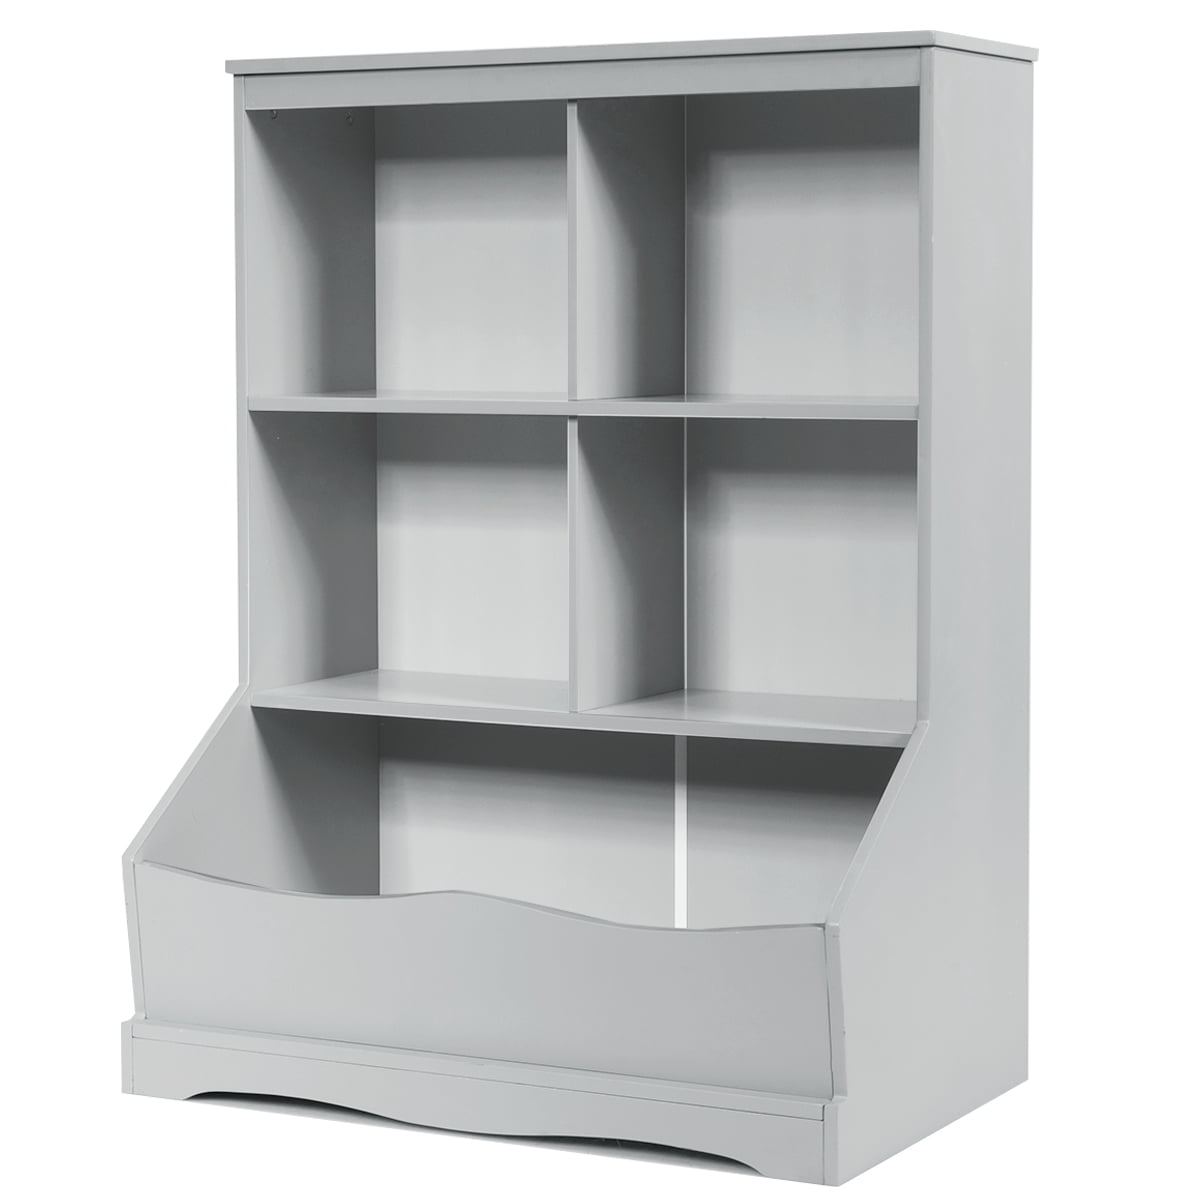 SET OF3 WHITE Wall Shelves Shelving CUBES Children furniture toys storage shelf 